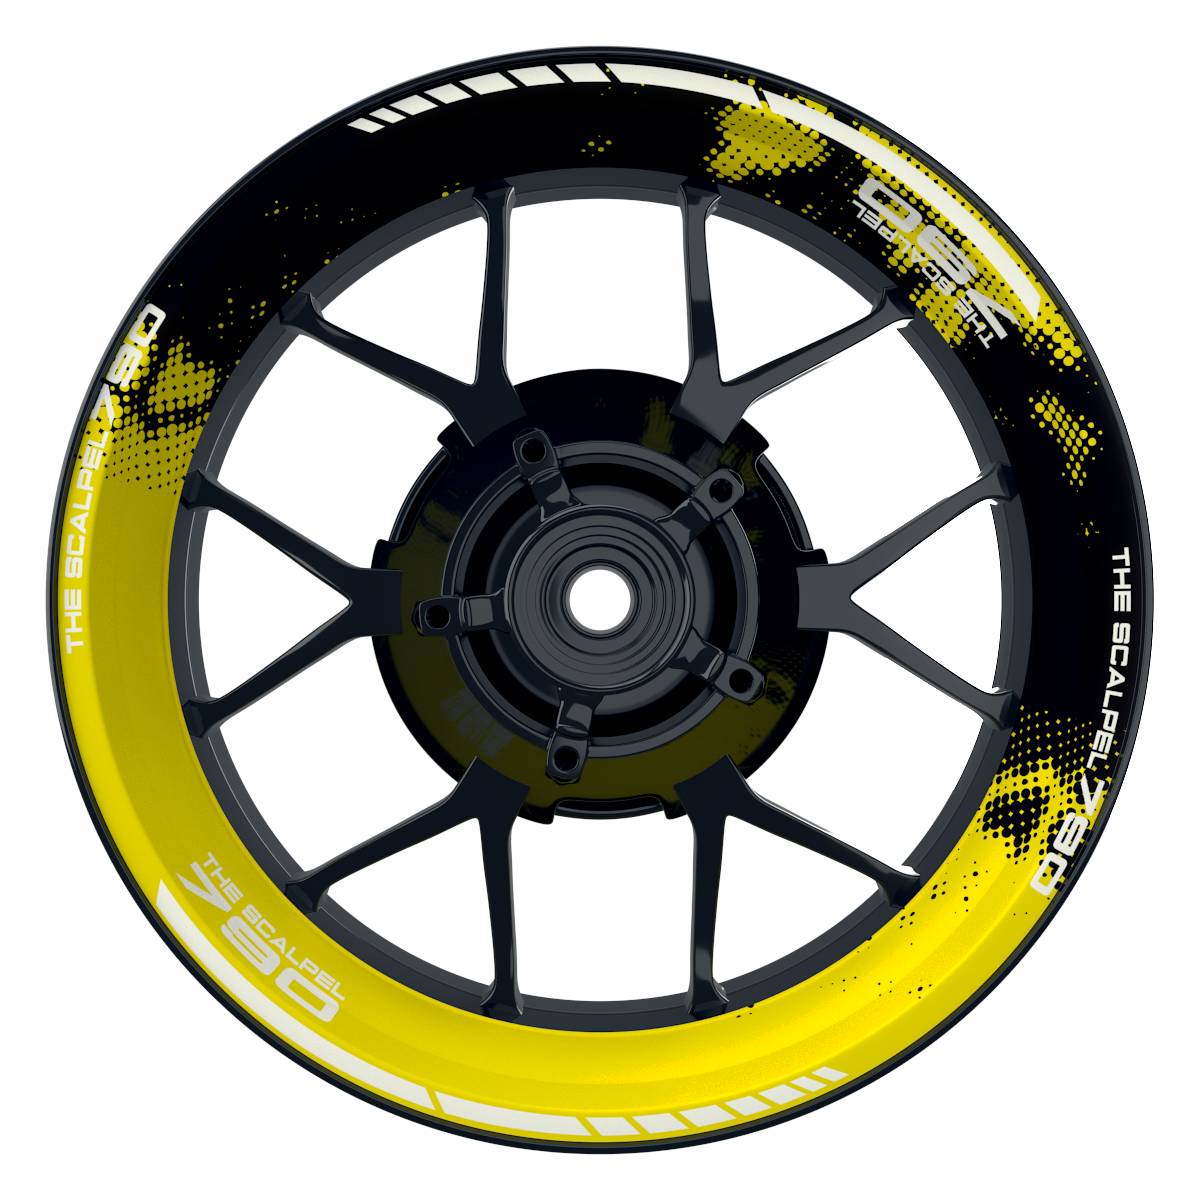 THE SCALPEL 790 Dots schwarz gelb Wheelsticker Felgenaufkleber